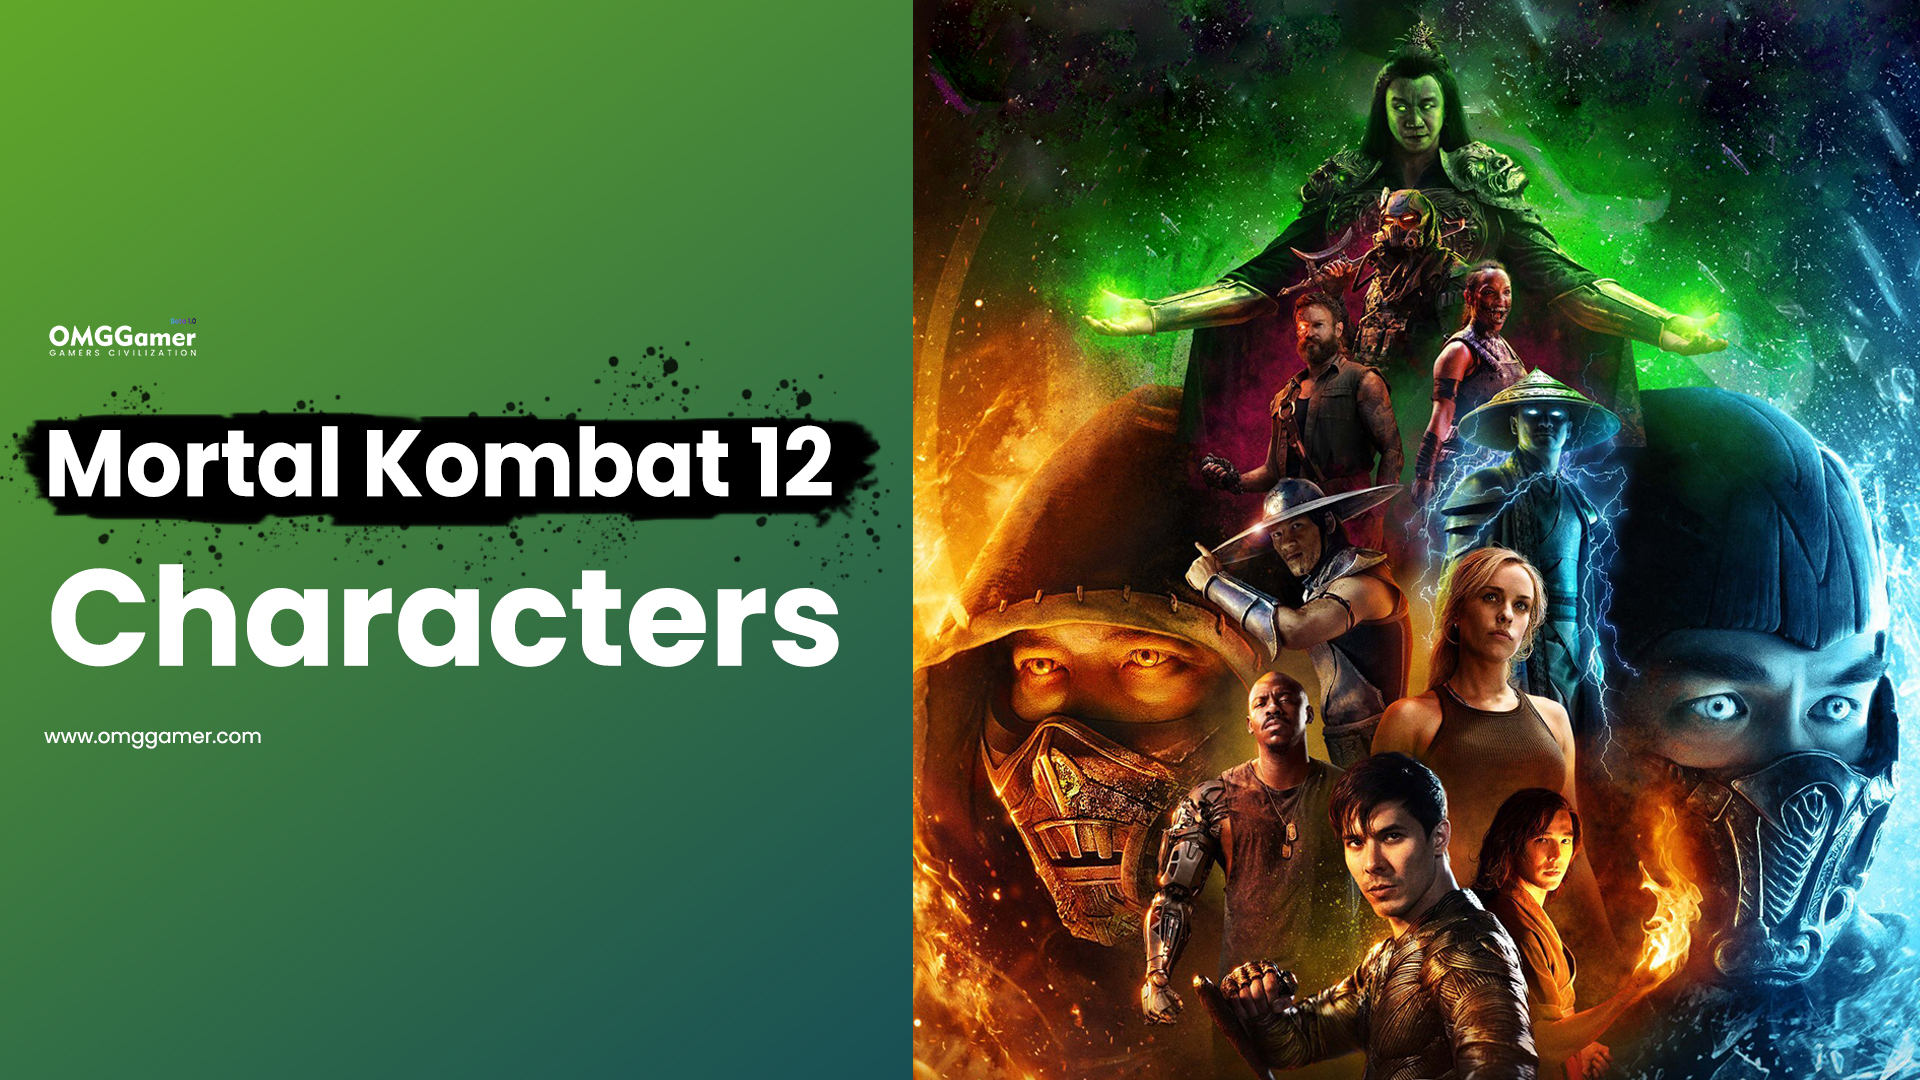 Mortal Kombat 12 Characters